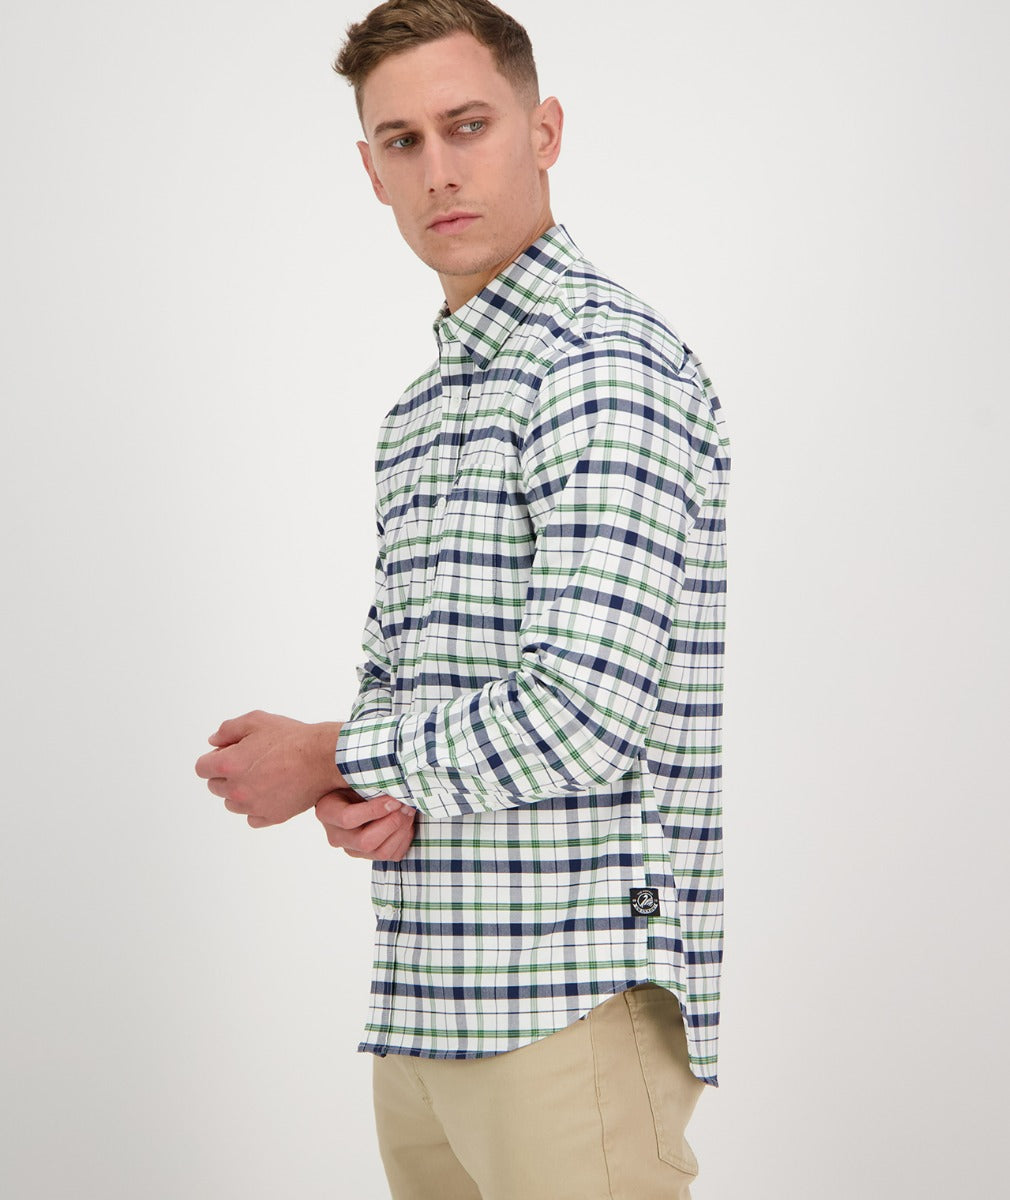 Northam Long Sleeve Shirt